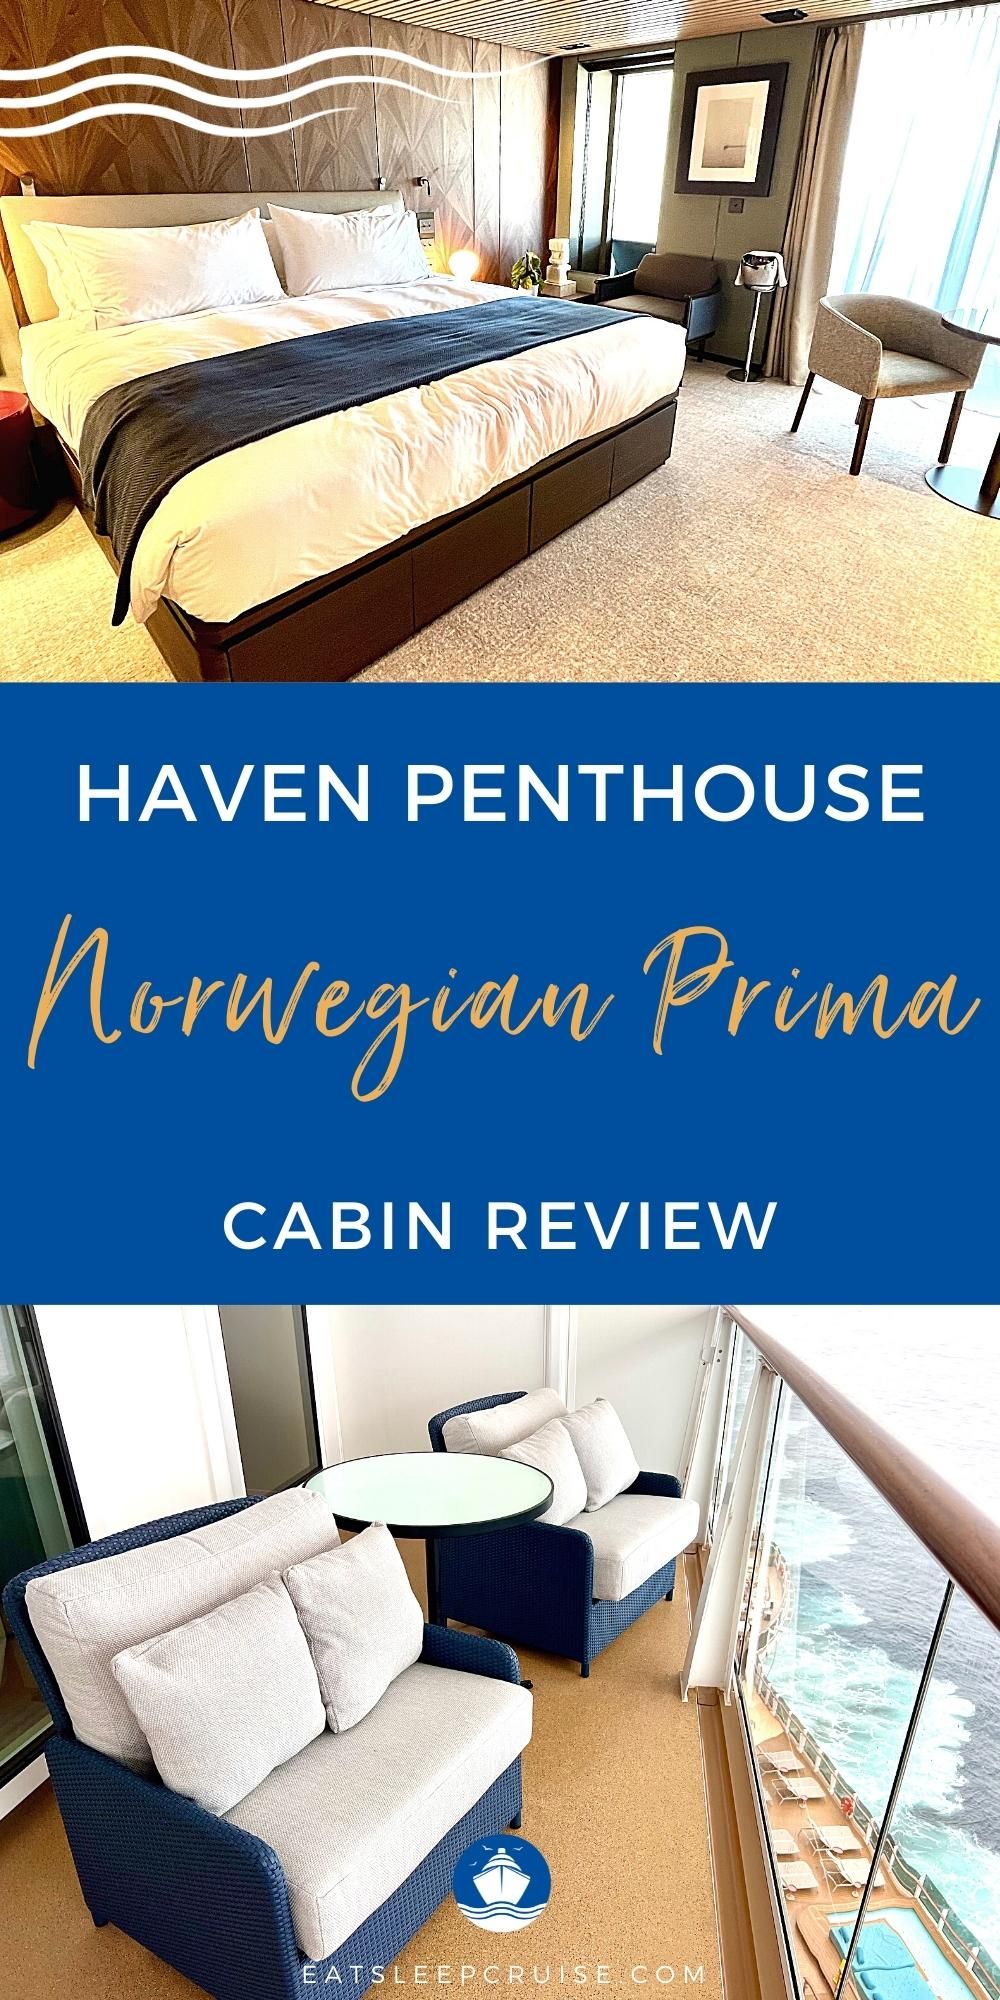 Norwegian Prima Haven Penthouse Balcony Cabin